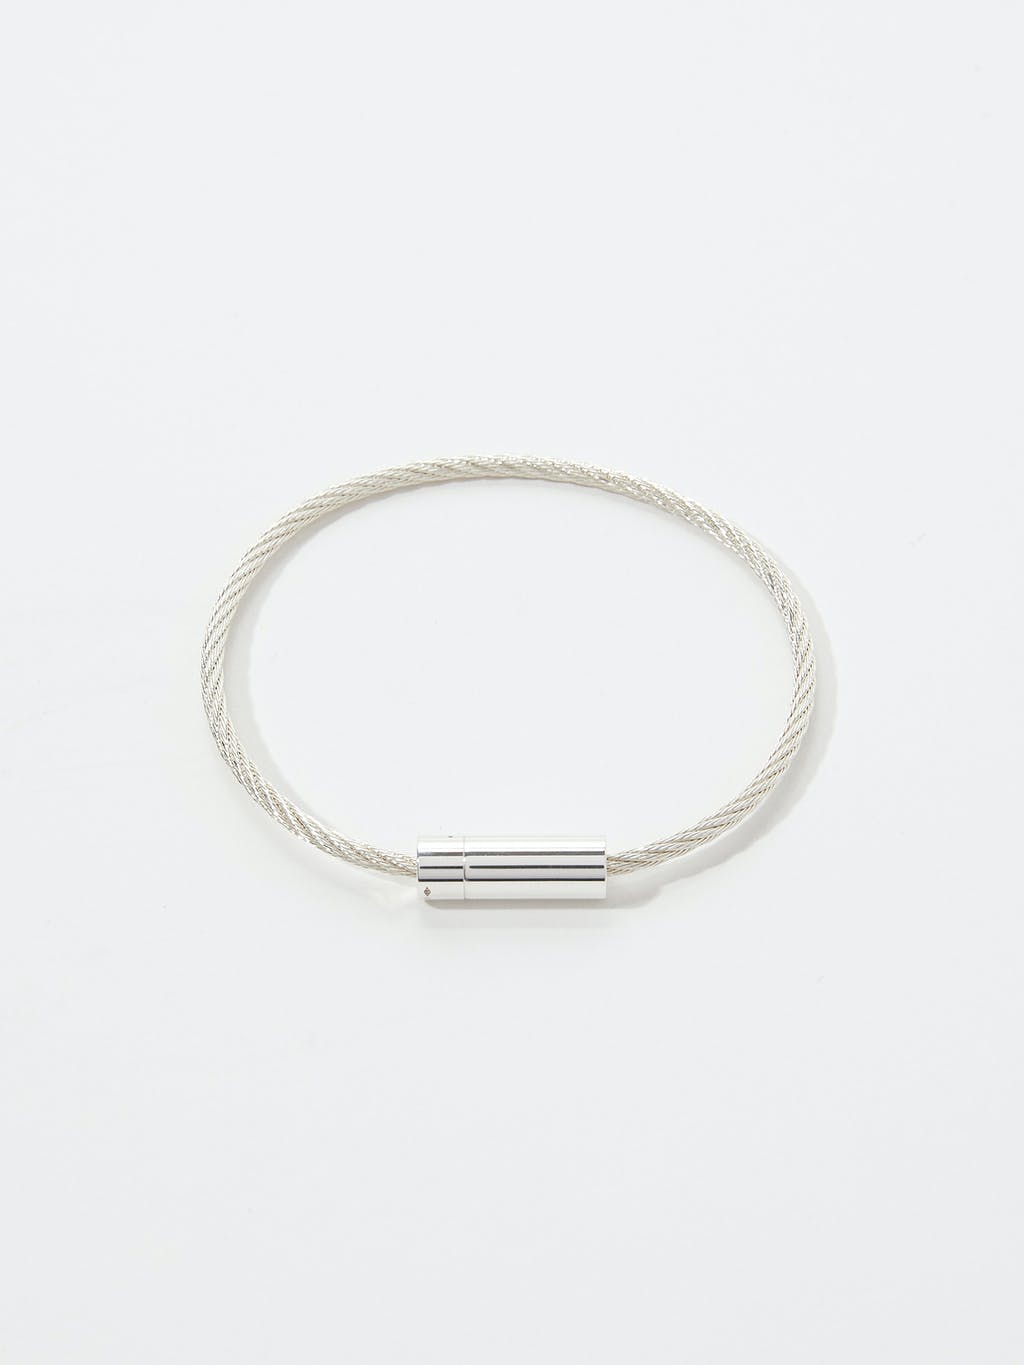 9g Sterling Silver Cable Bracelet